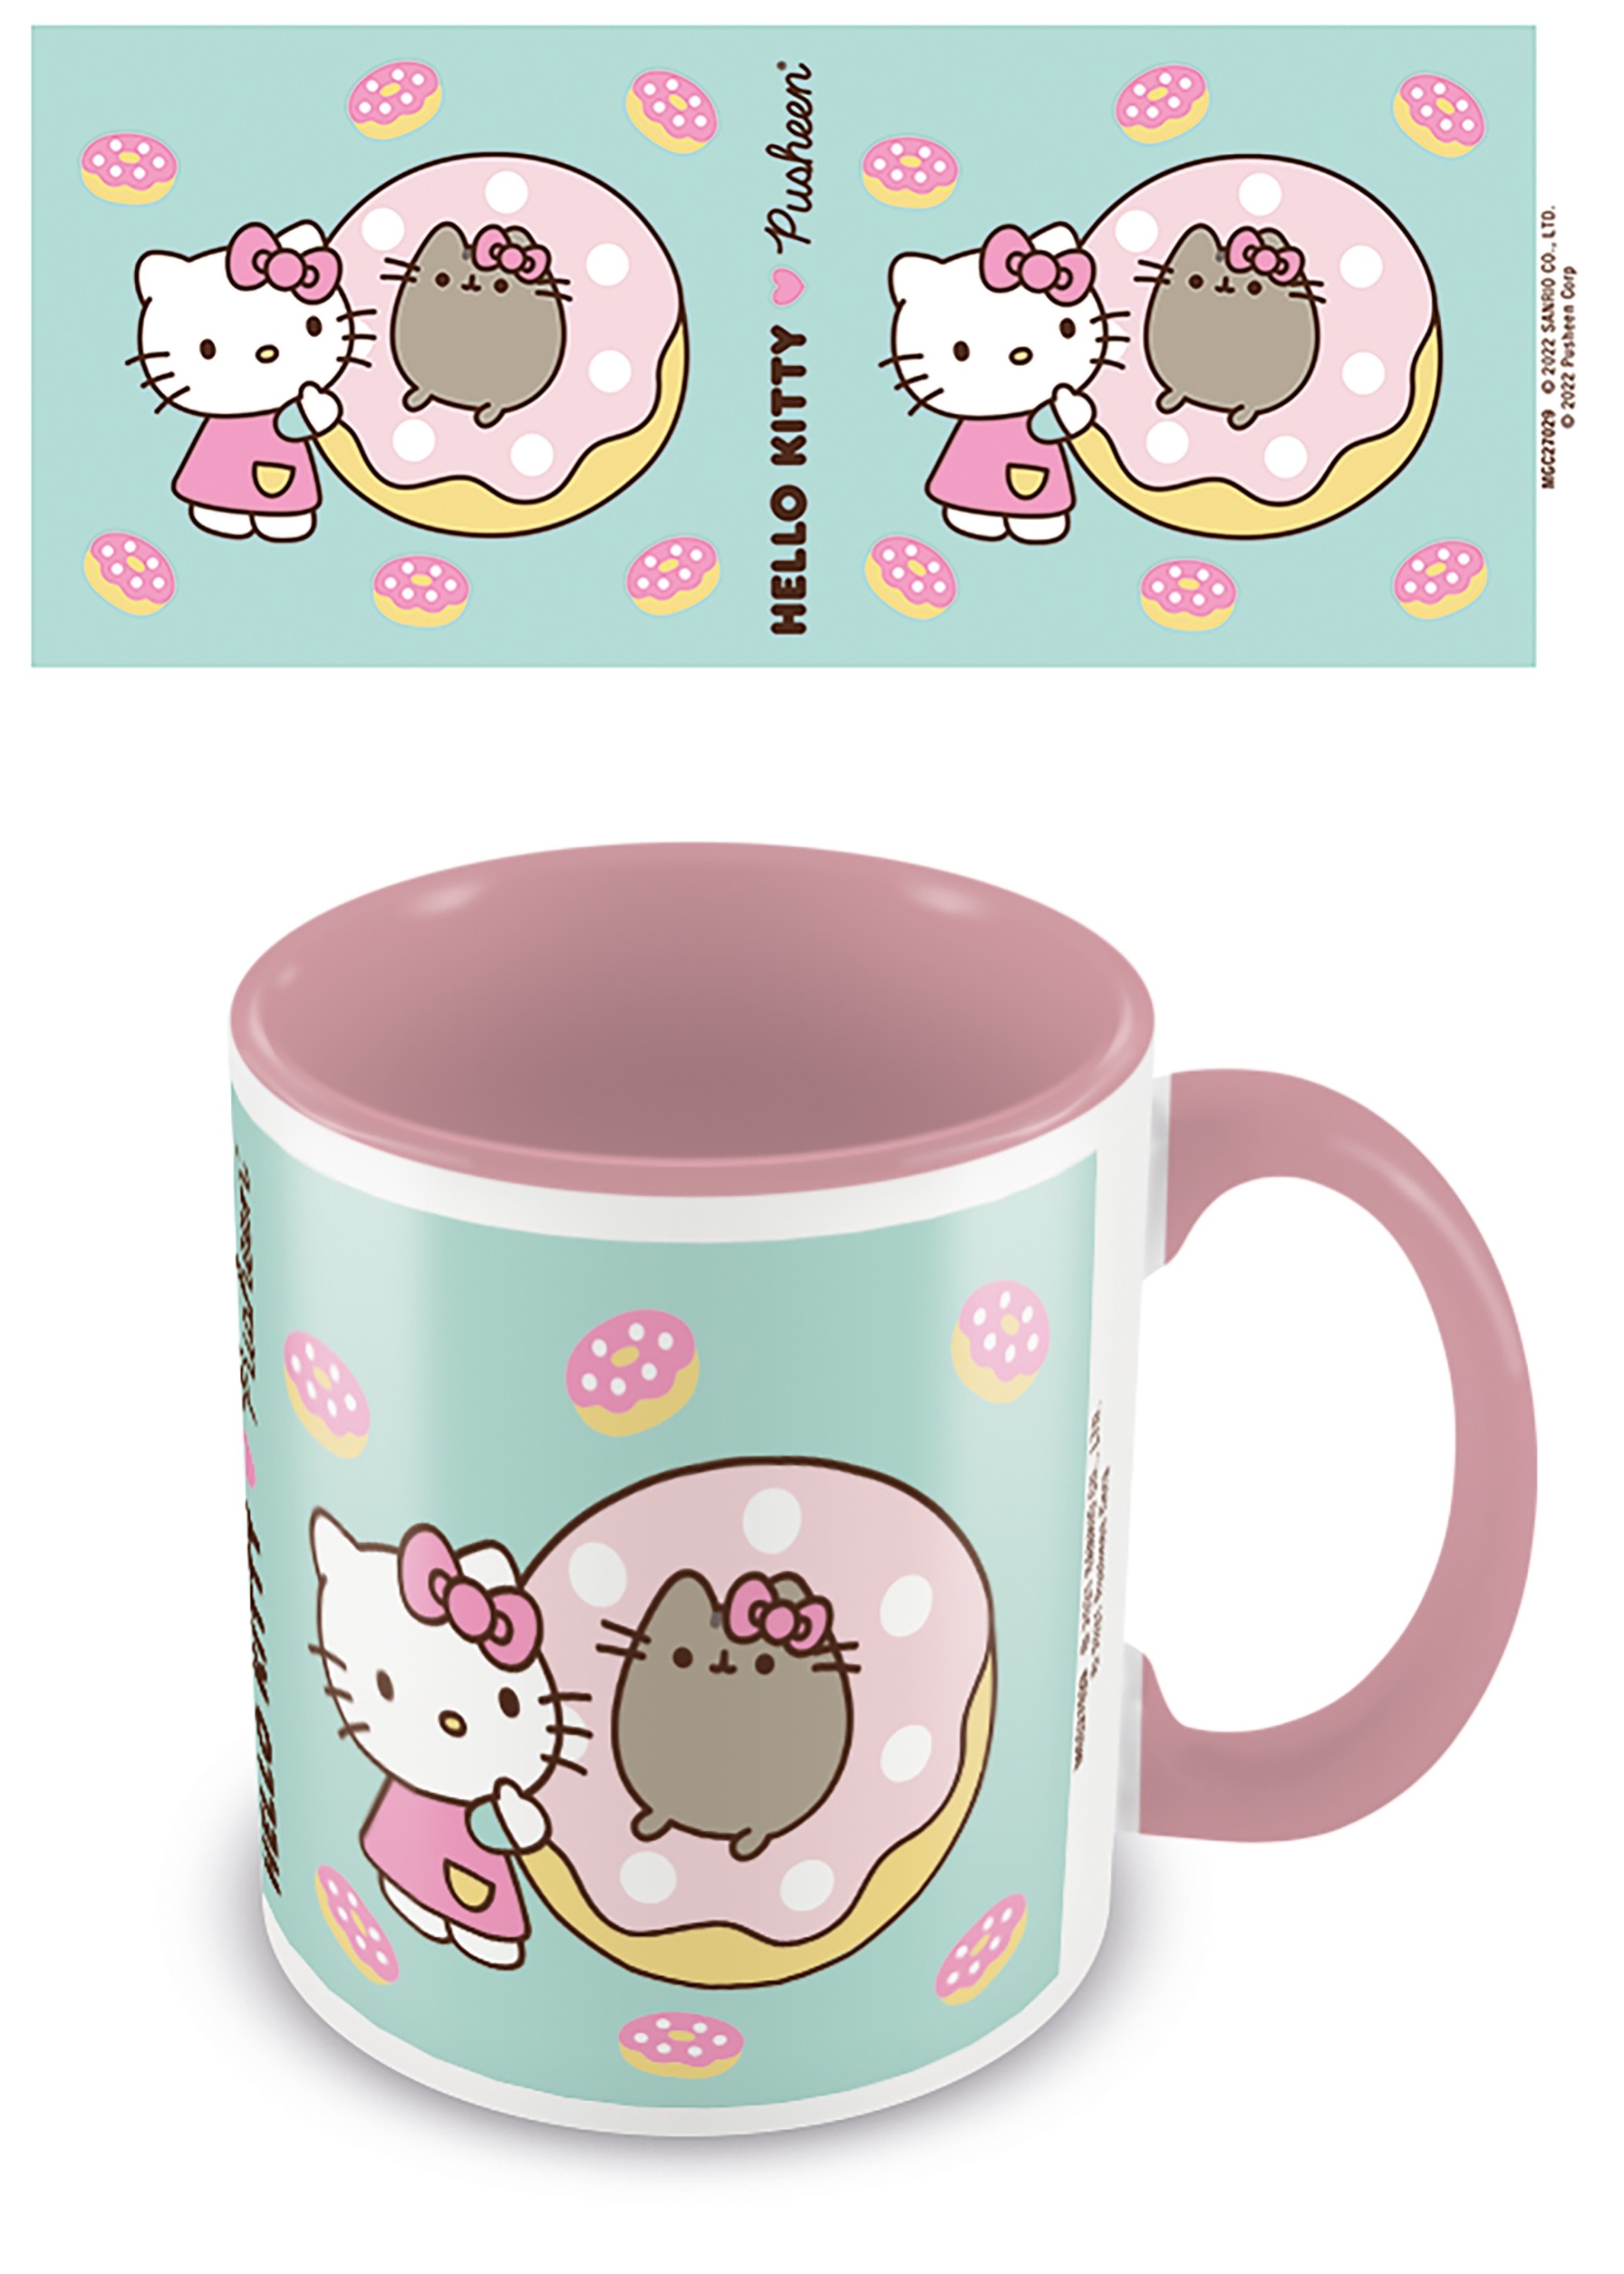 Pusheen x Hello Kitty - Mug - Treat Time - Pink